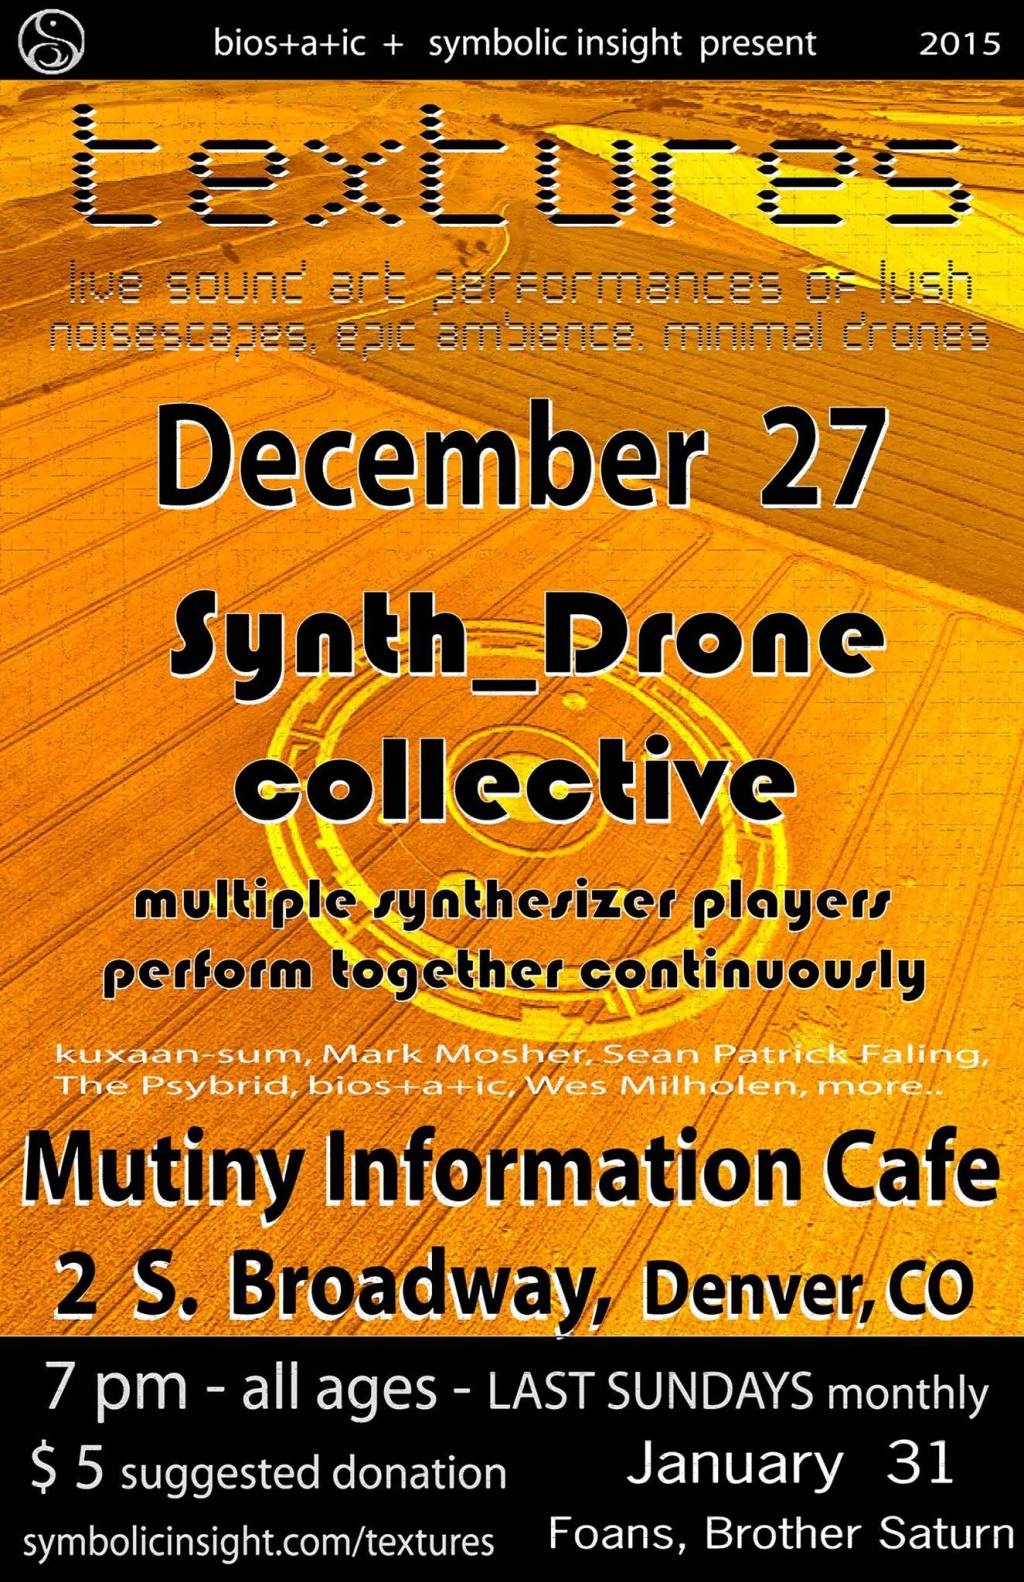 I’m Performing Sunday Dec 27th, 7pm at Mutiny Information Café in Denver